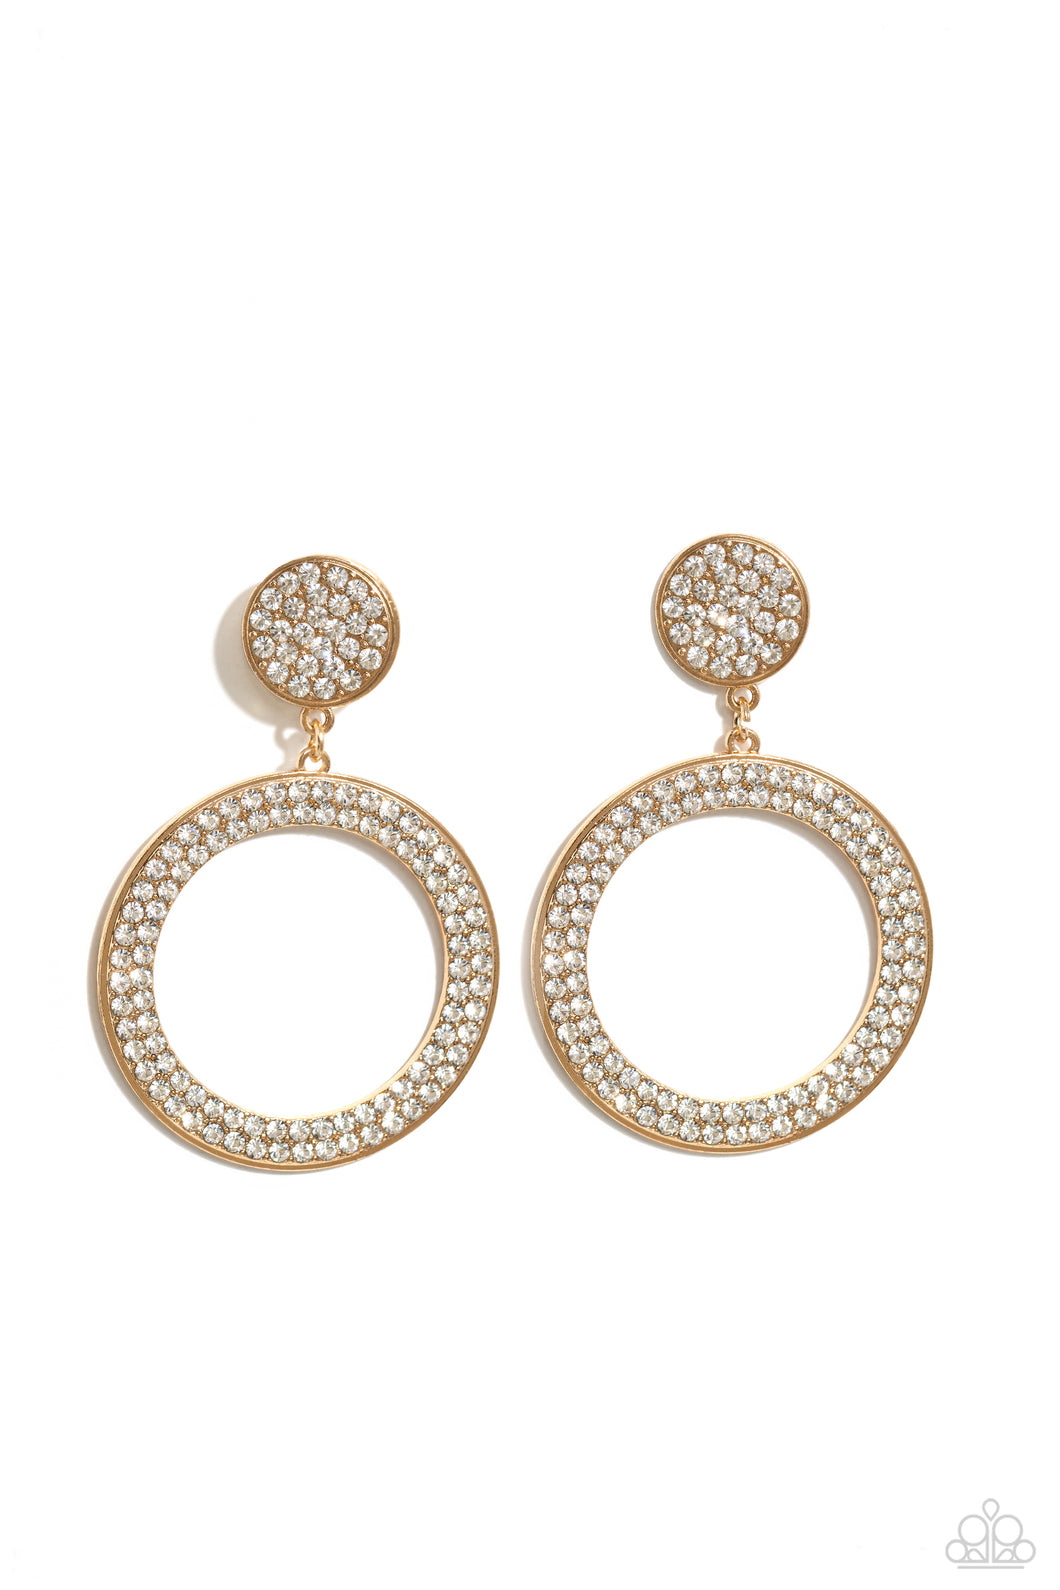 oak-sisters-jewelry-glow-you-away-gold-post earrings-paparazzi-accessories-by-lisa